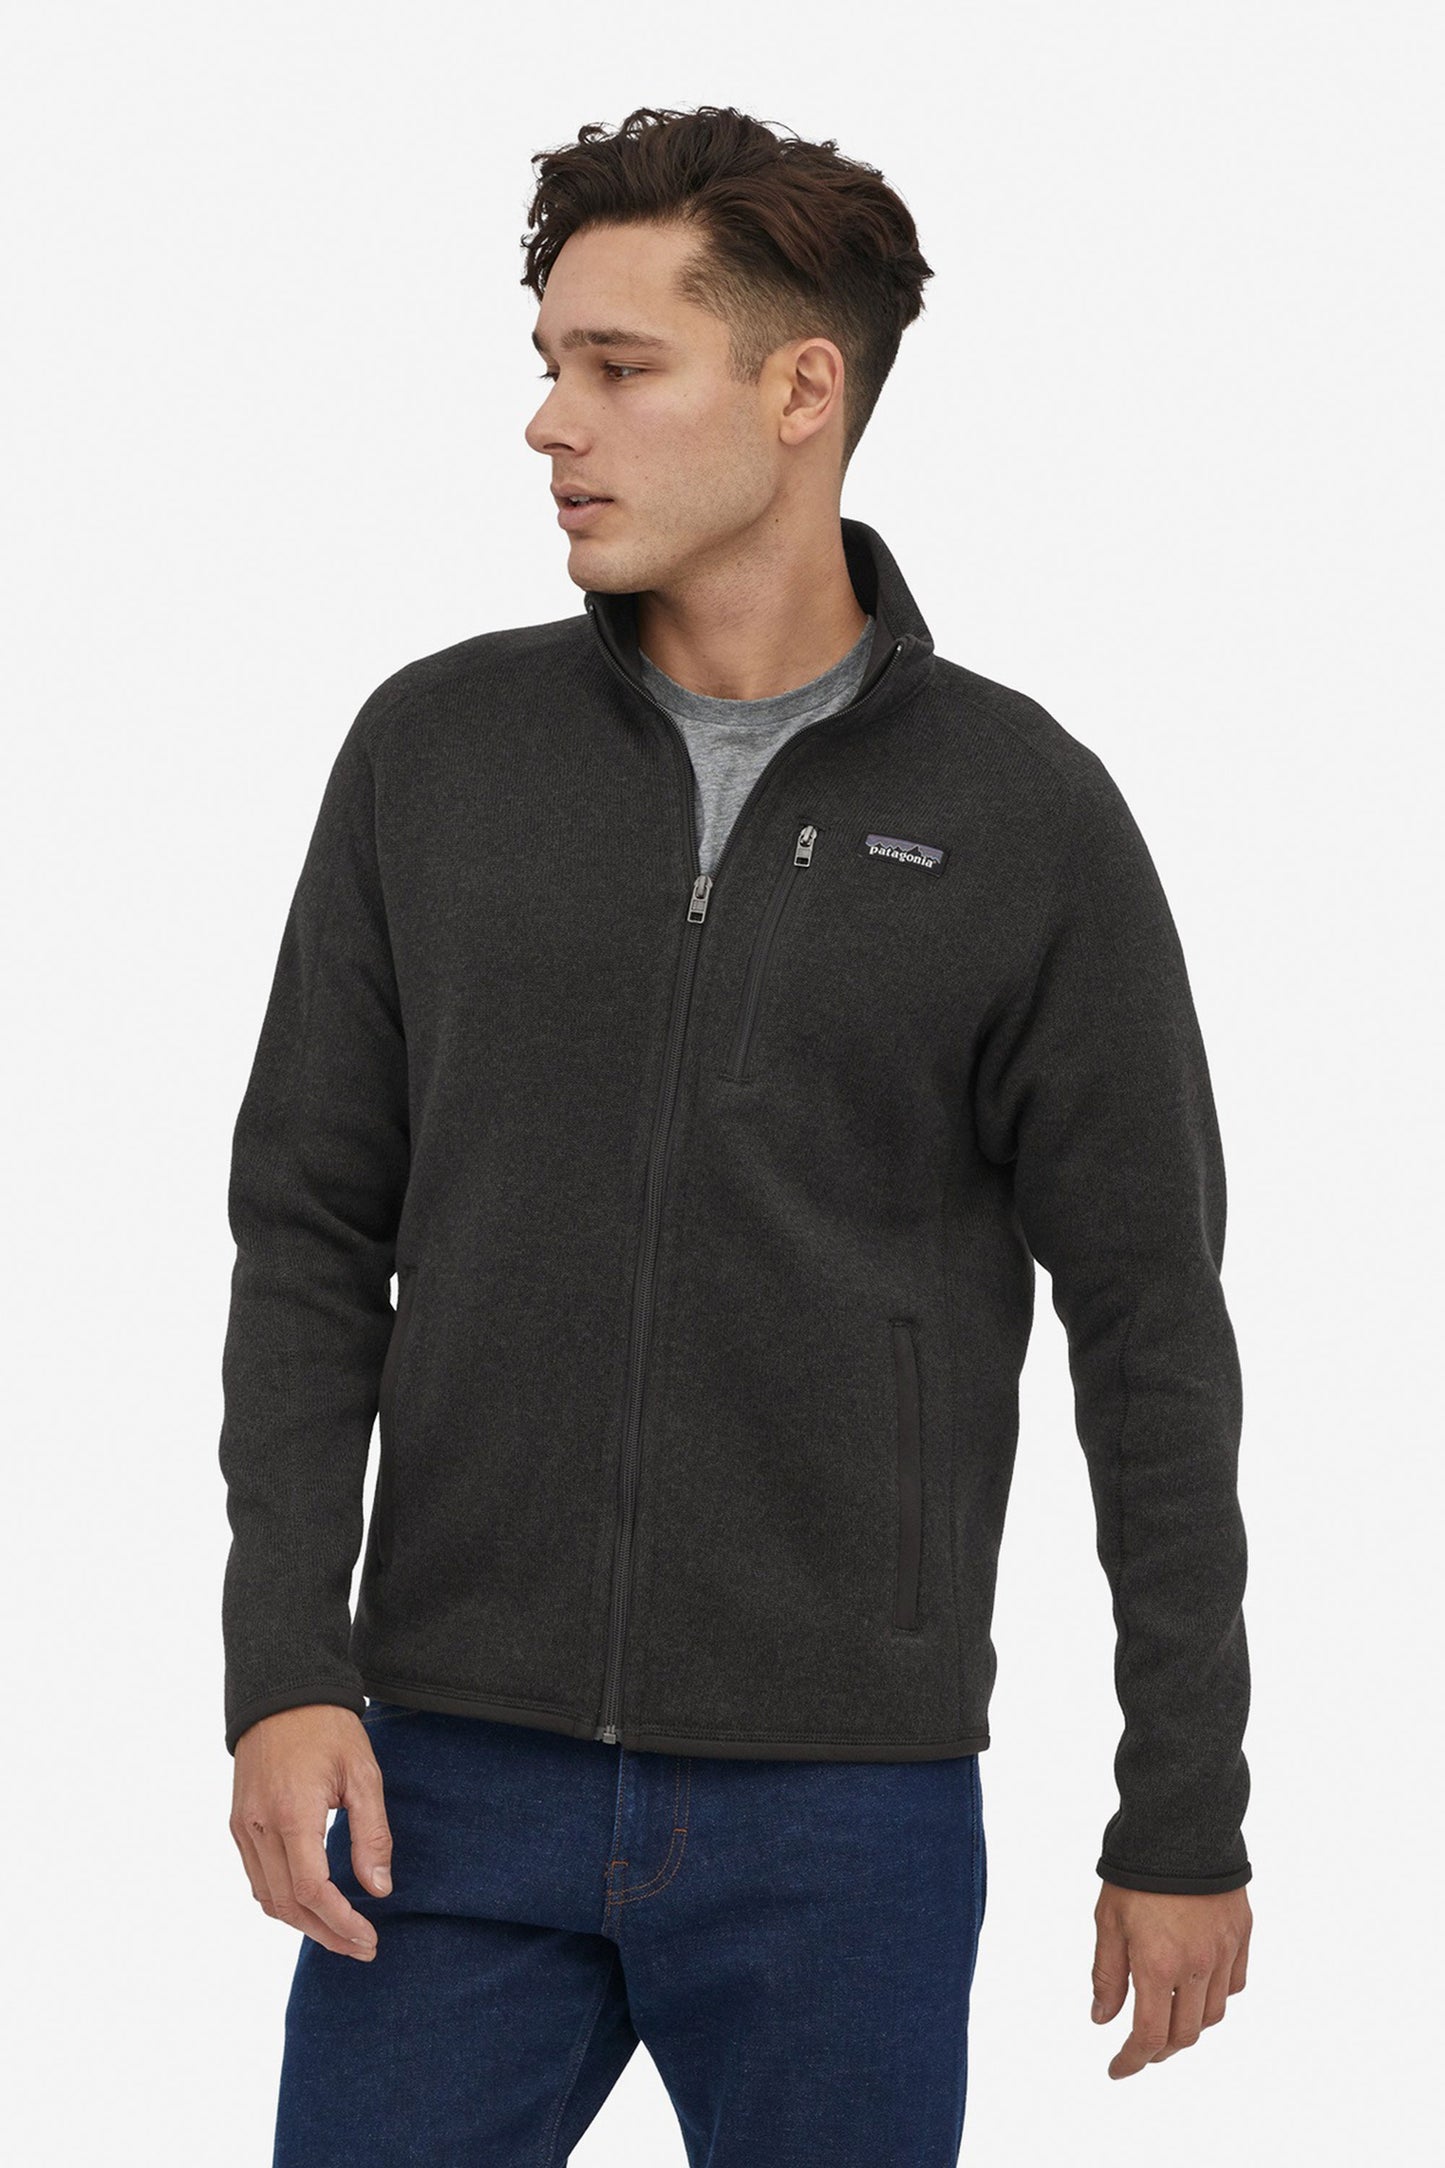     Pukas-Surf-Shop-patagonia-sweater-better-sweater-jacket